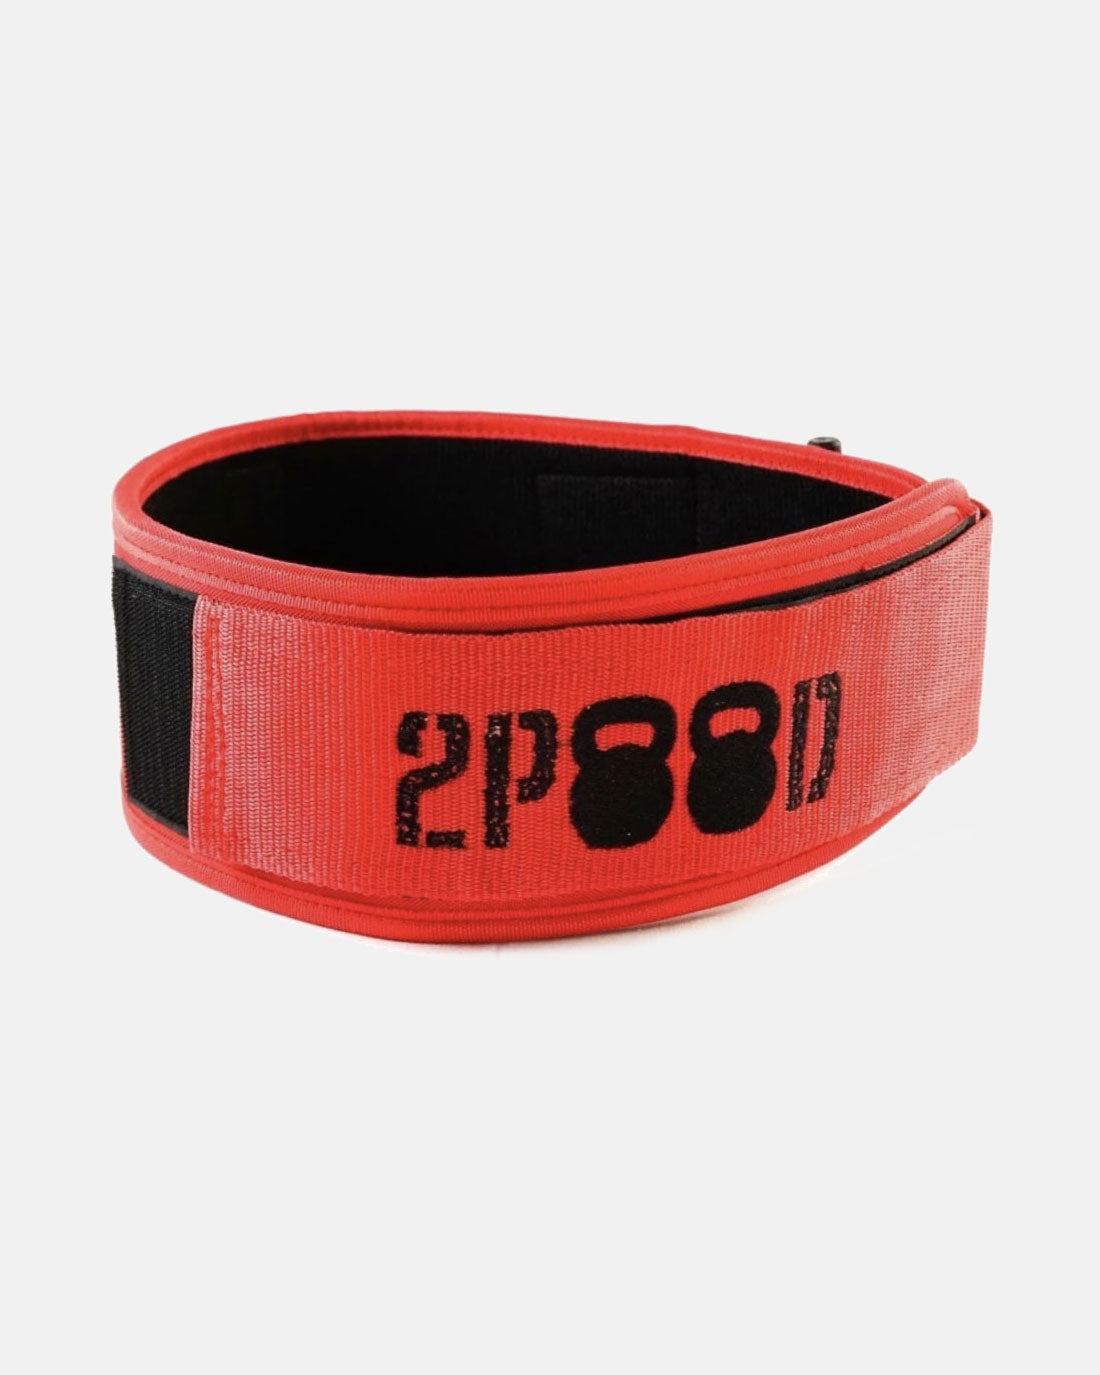 2pood weightlifting belt red kilo